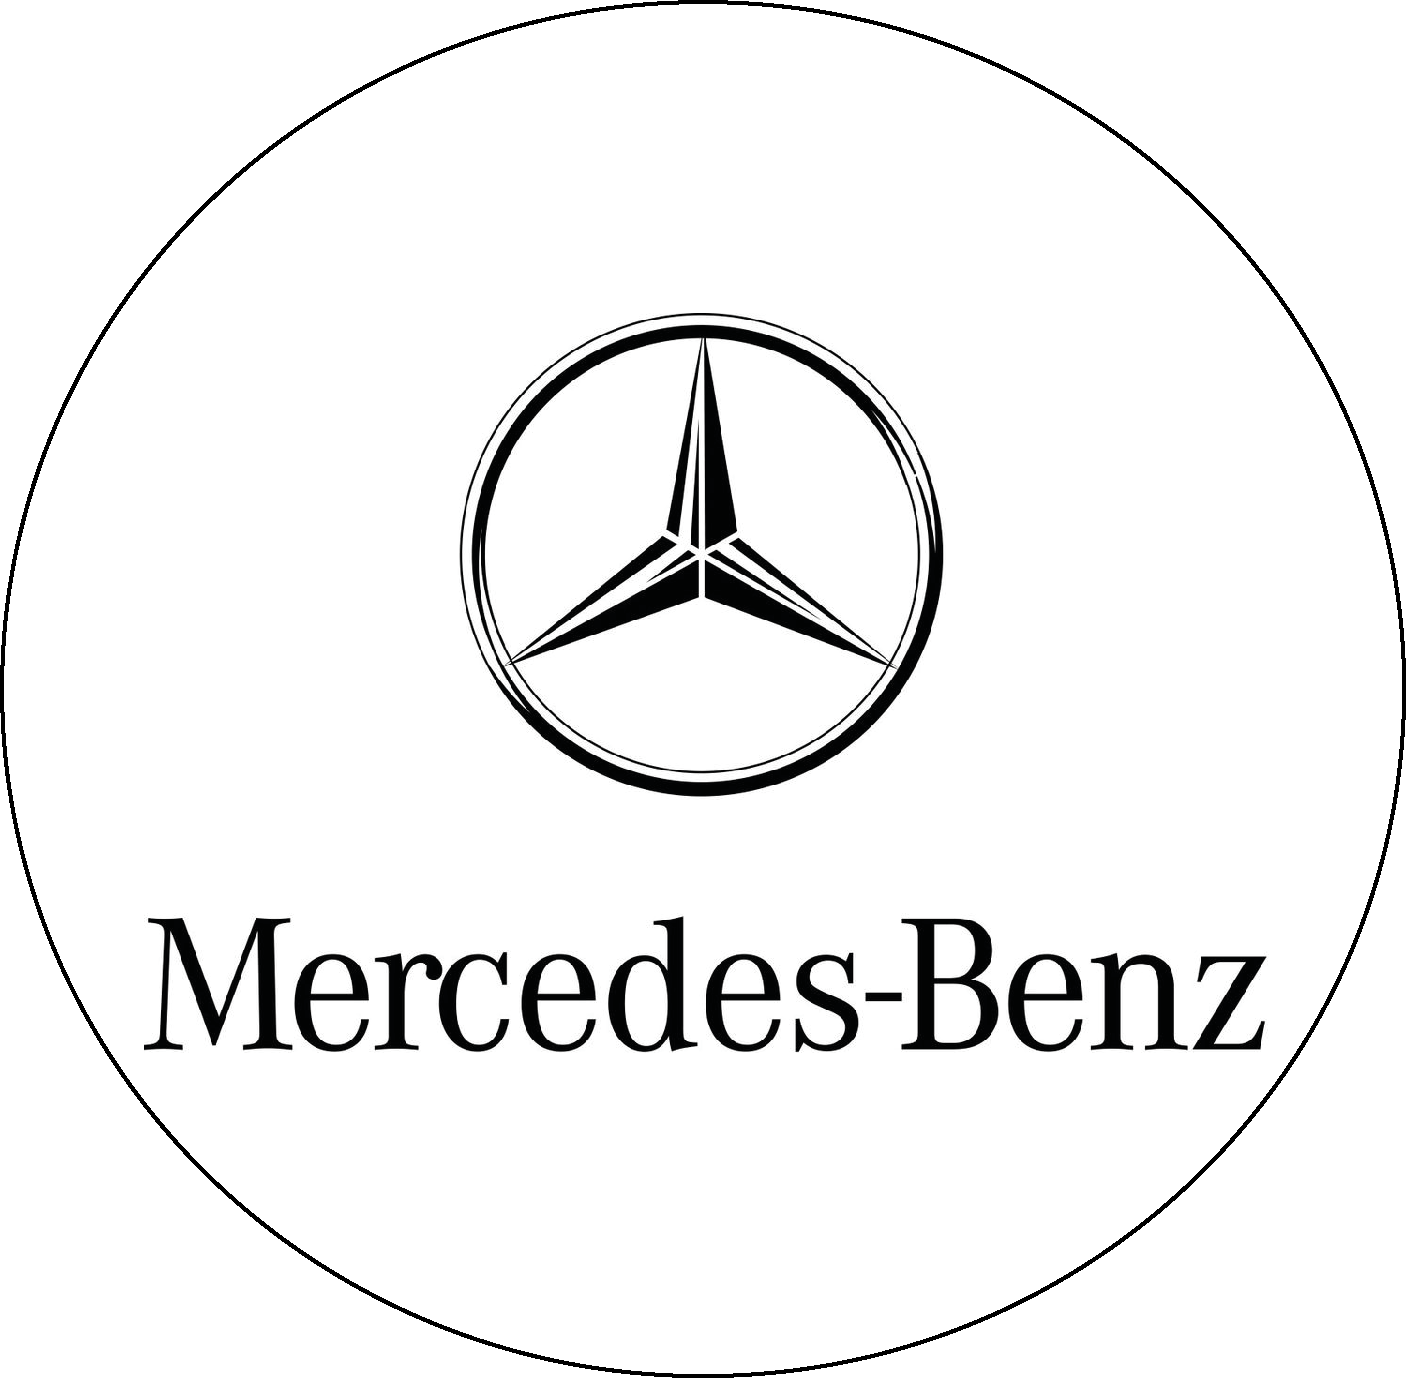 MERCEDES- BENZ